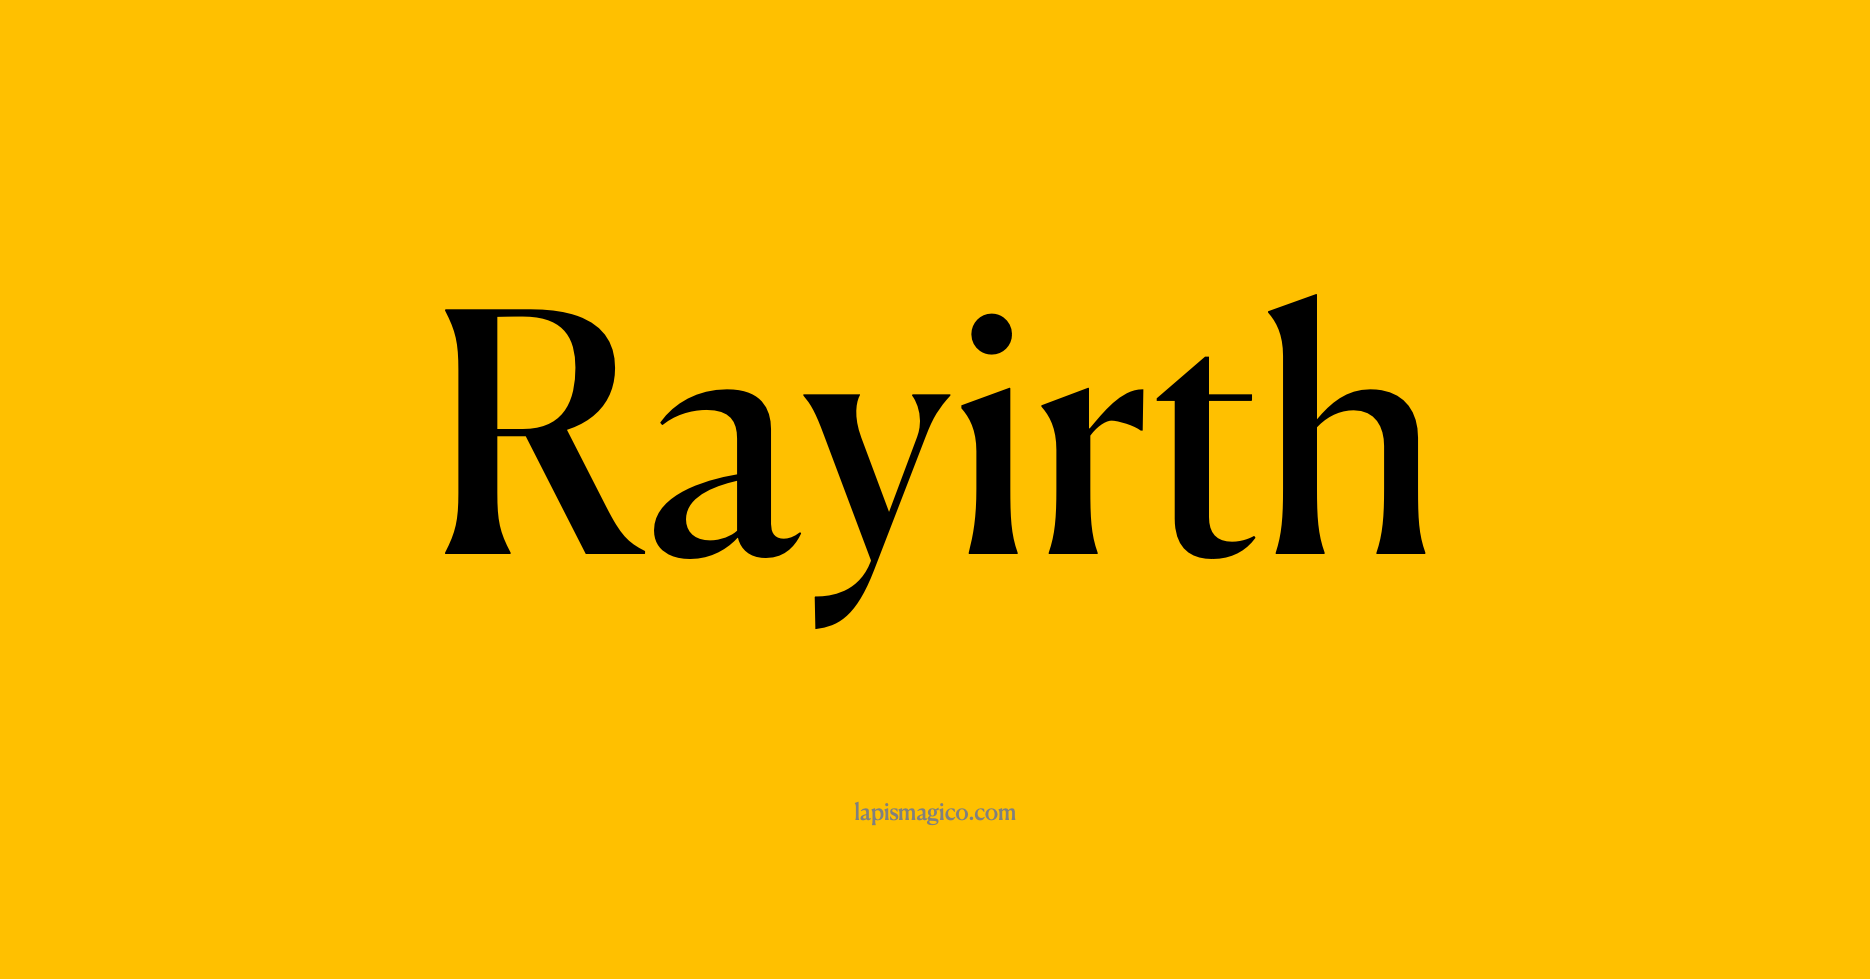 Nome Rayirth